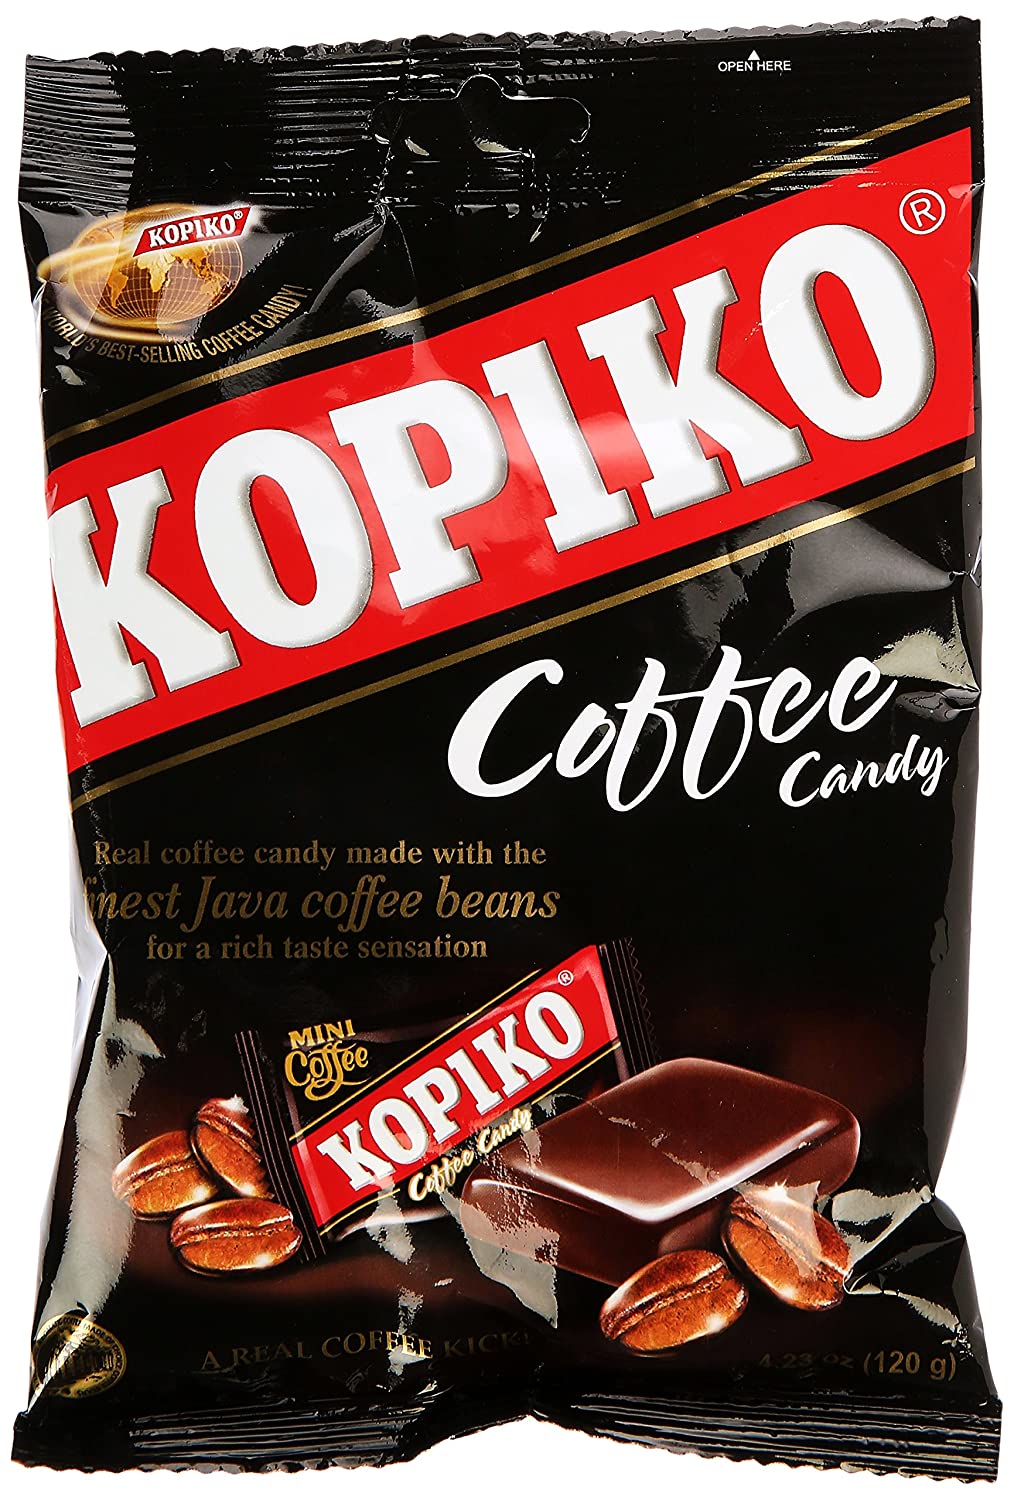 Kopiko Coffee Candy